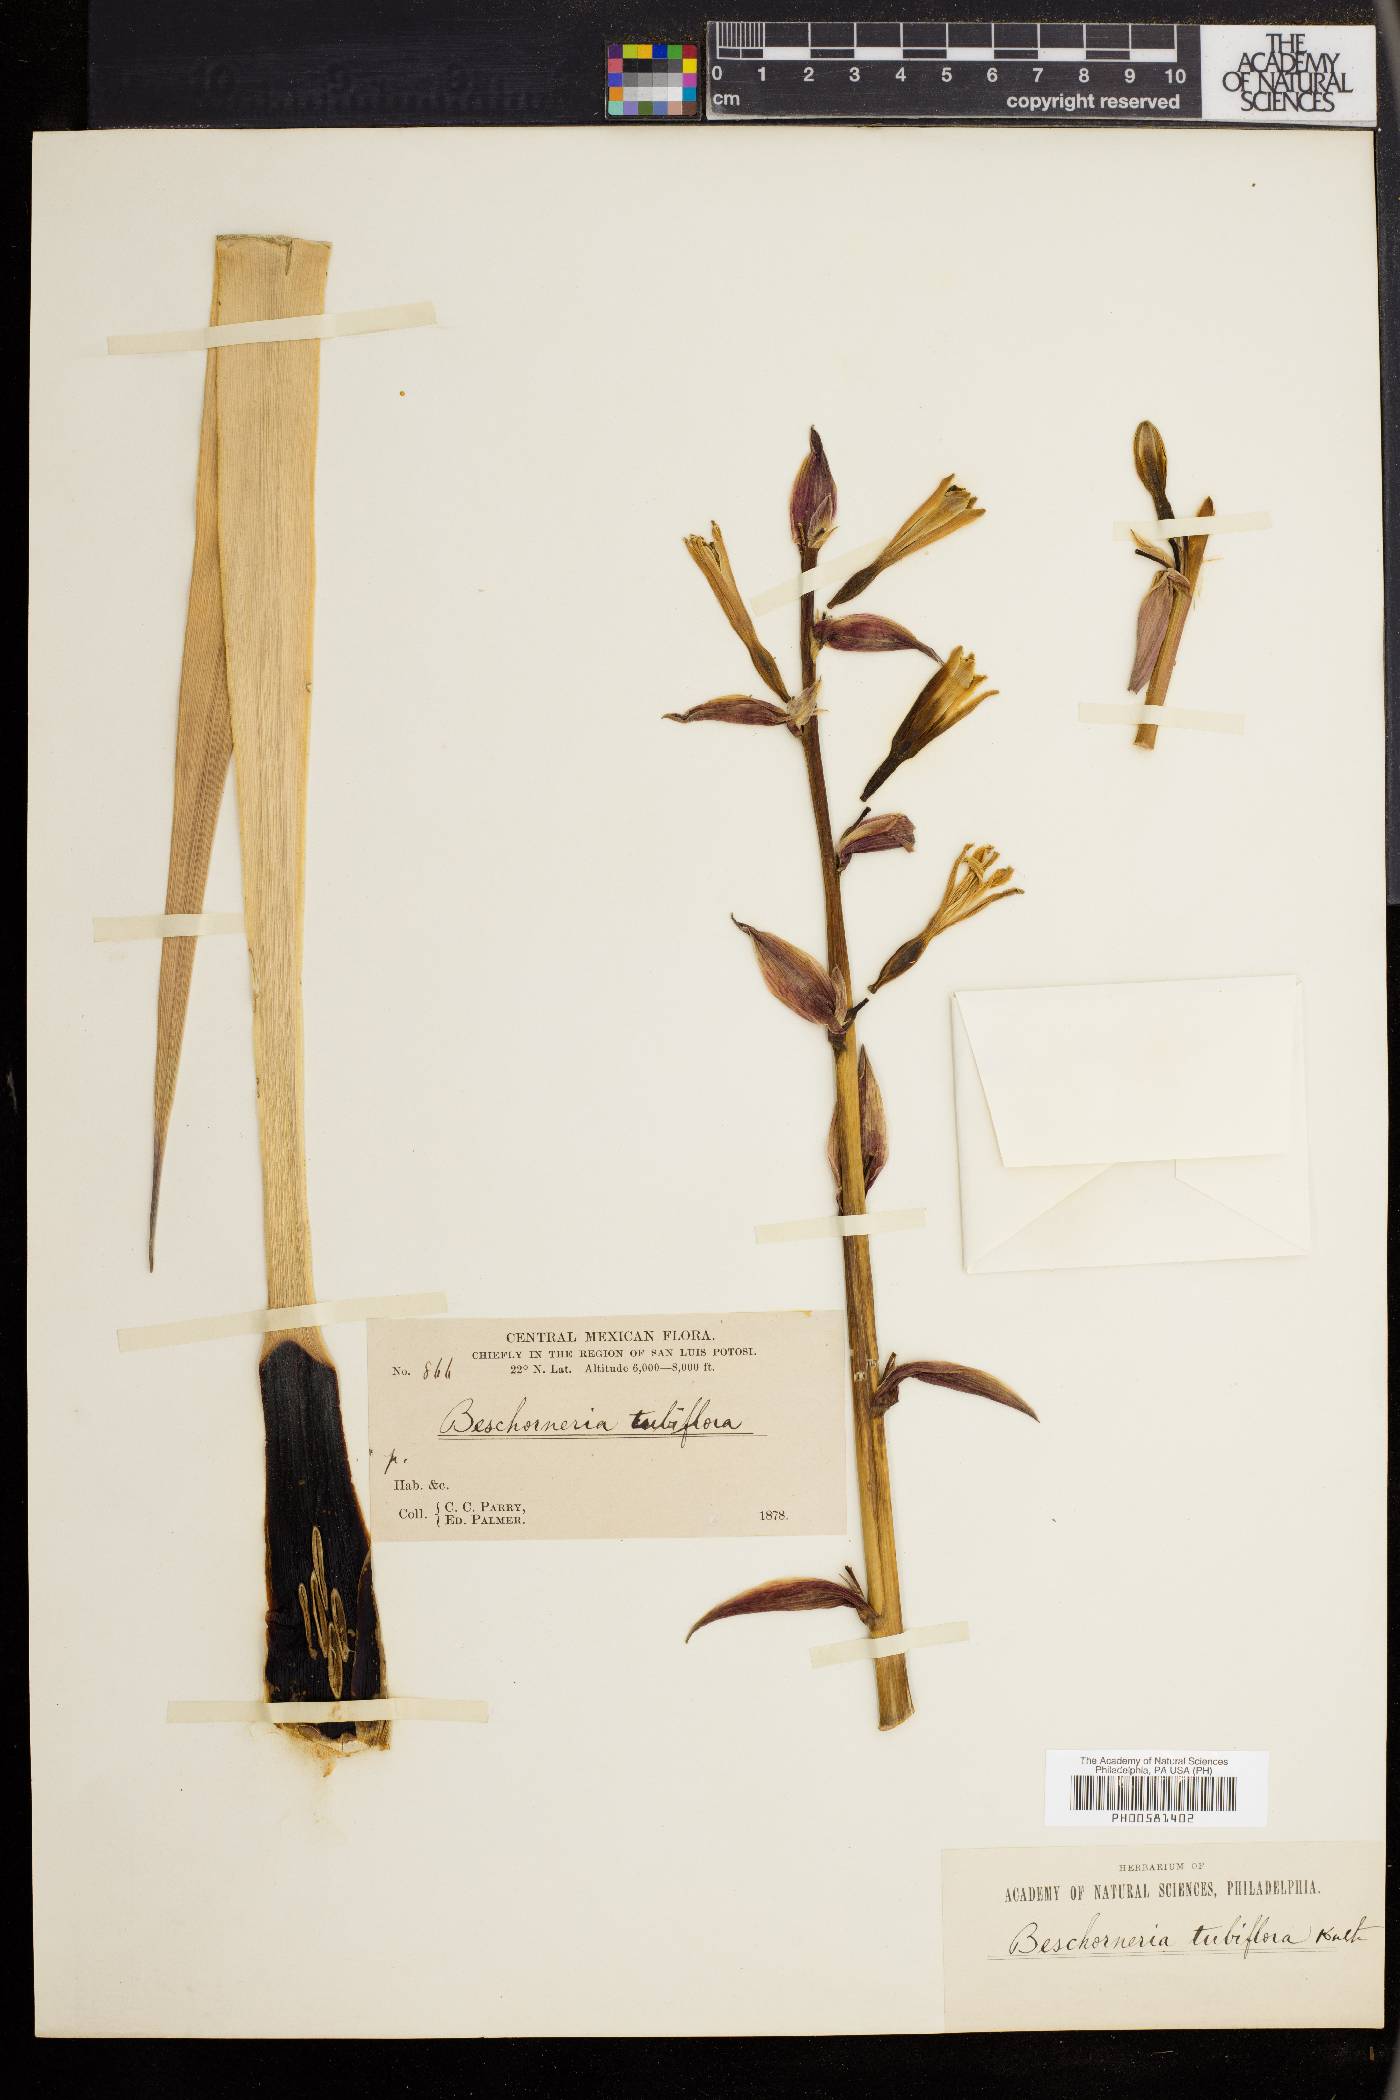 Beschorneria tubiflora image